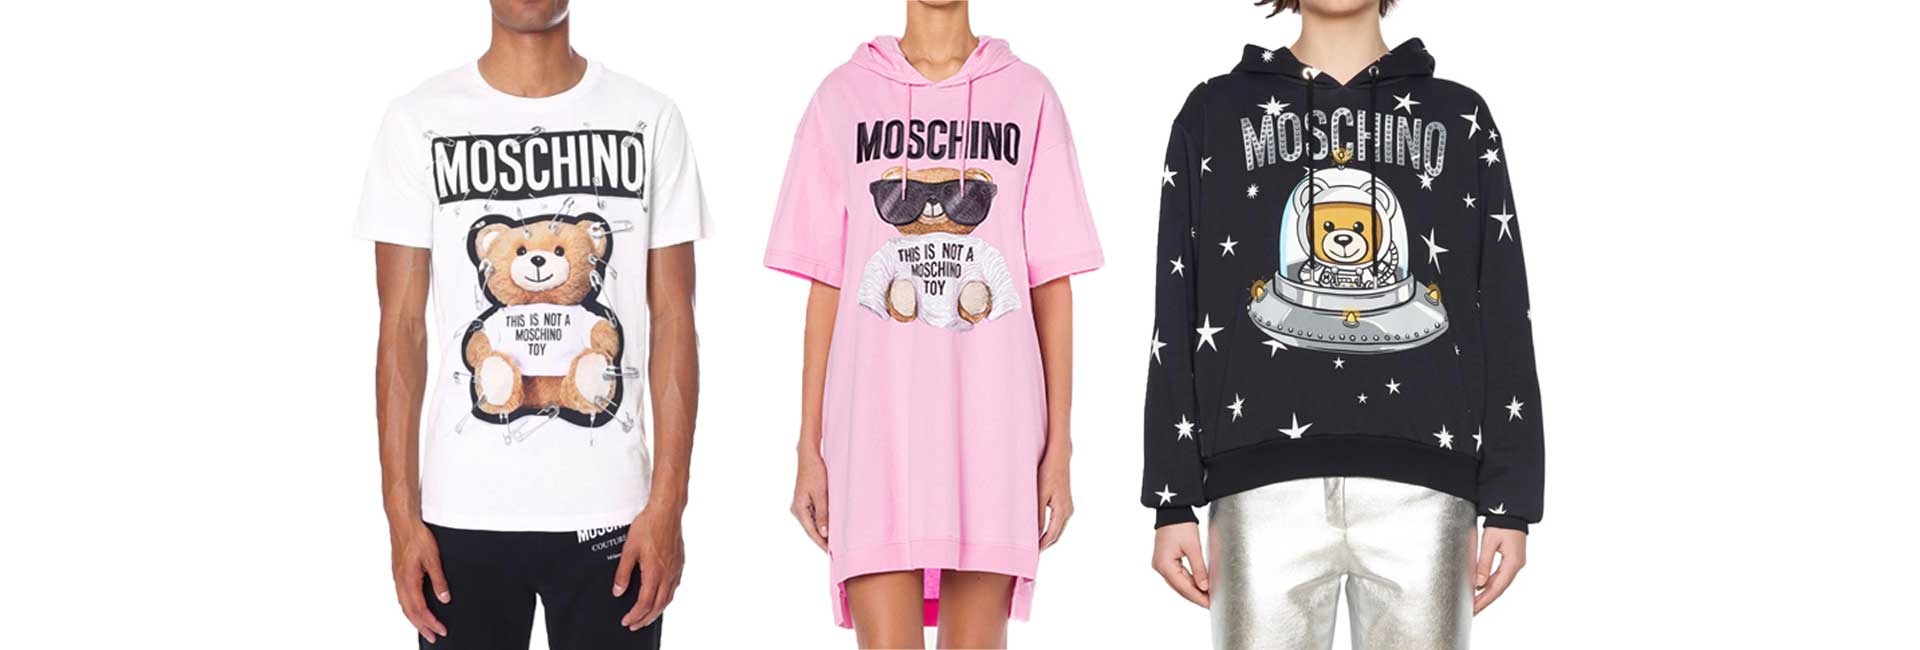 Moschino Clothes